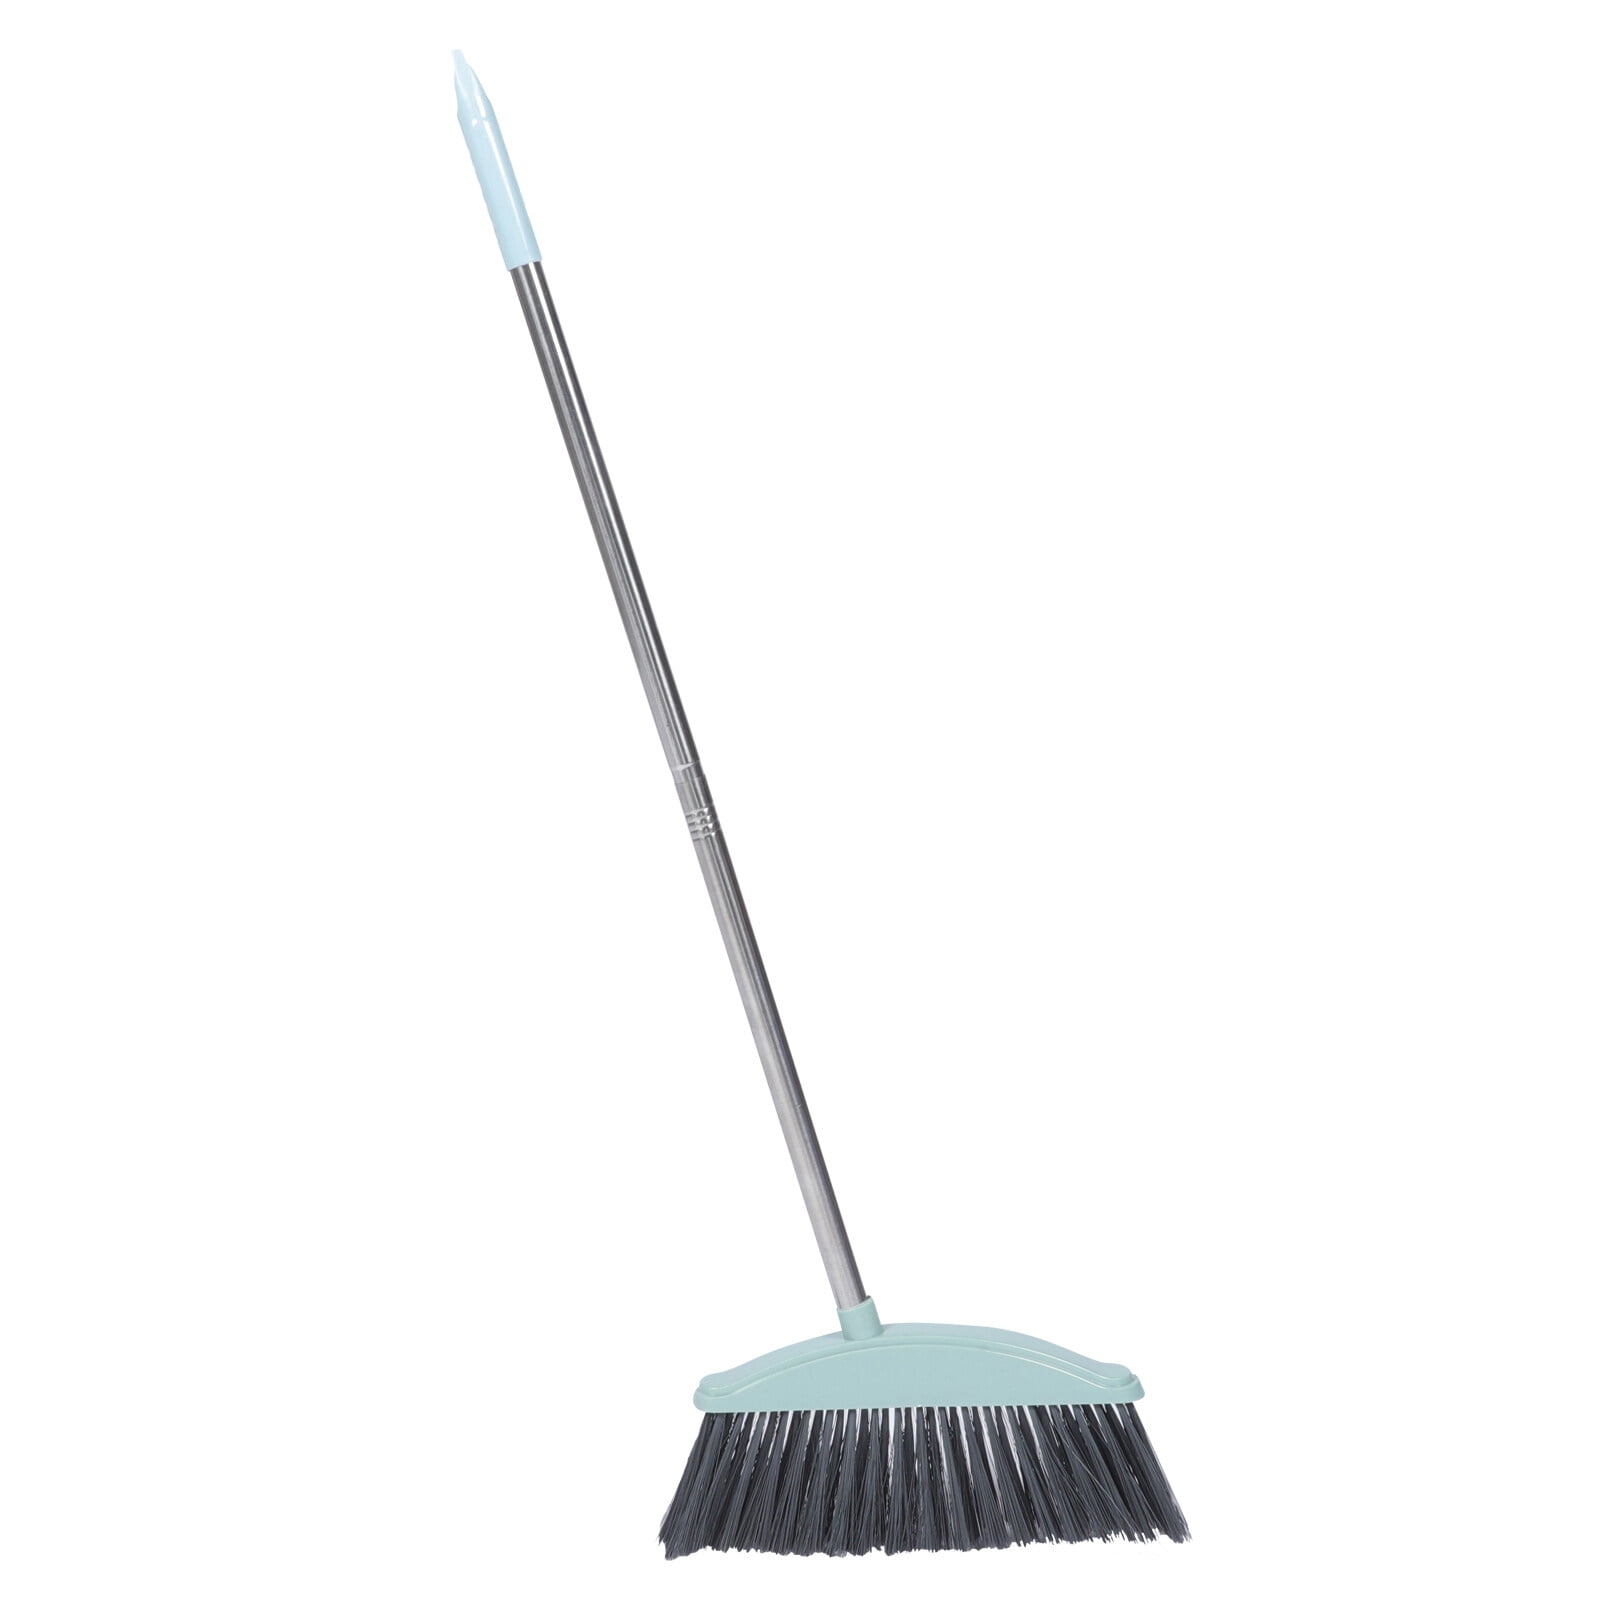  DOITOOL 3pcs Splicable Broom Garden Broom Handled Brooms  Sweeping Broom Kitchen Broom Carpet Brushes for Cleaning Broom for Hardwood  Floors Stainless Steel Garbage Shovel Anti-Static : Health & Household